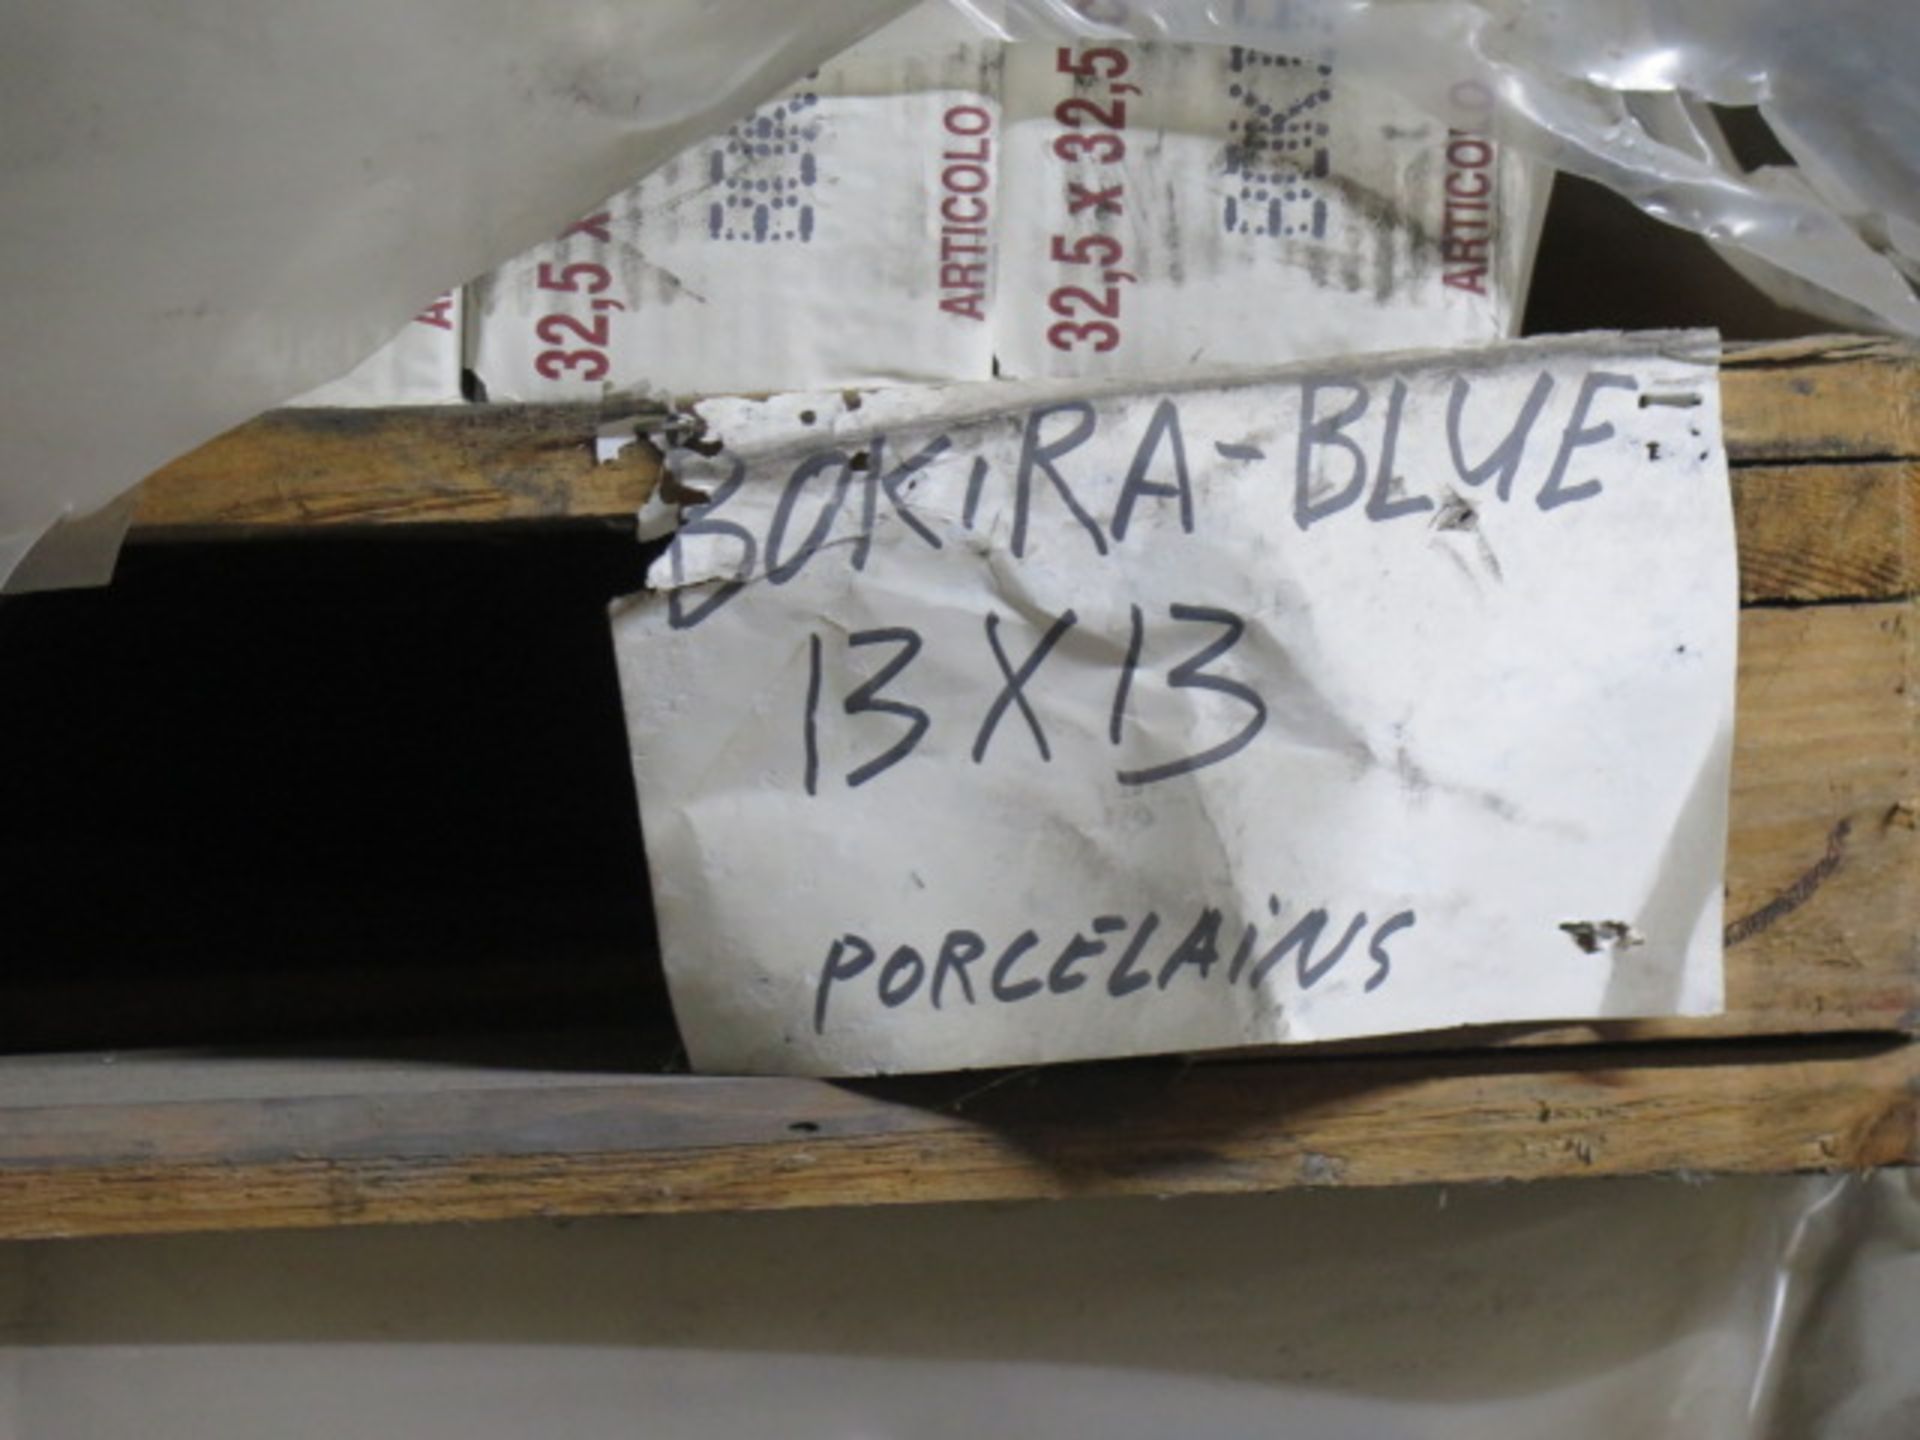 Bokira Blue 13" x 13" Porcelain Tiles (9 Pallets) (SOLD AS-IS - NO WARRANTY) - Image 6 of 7